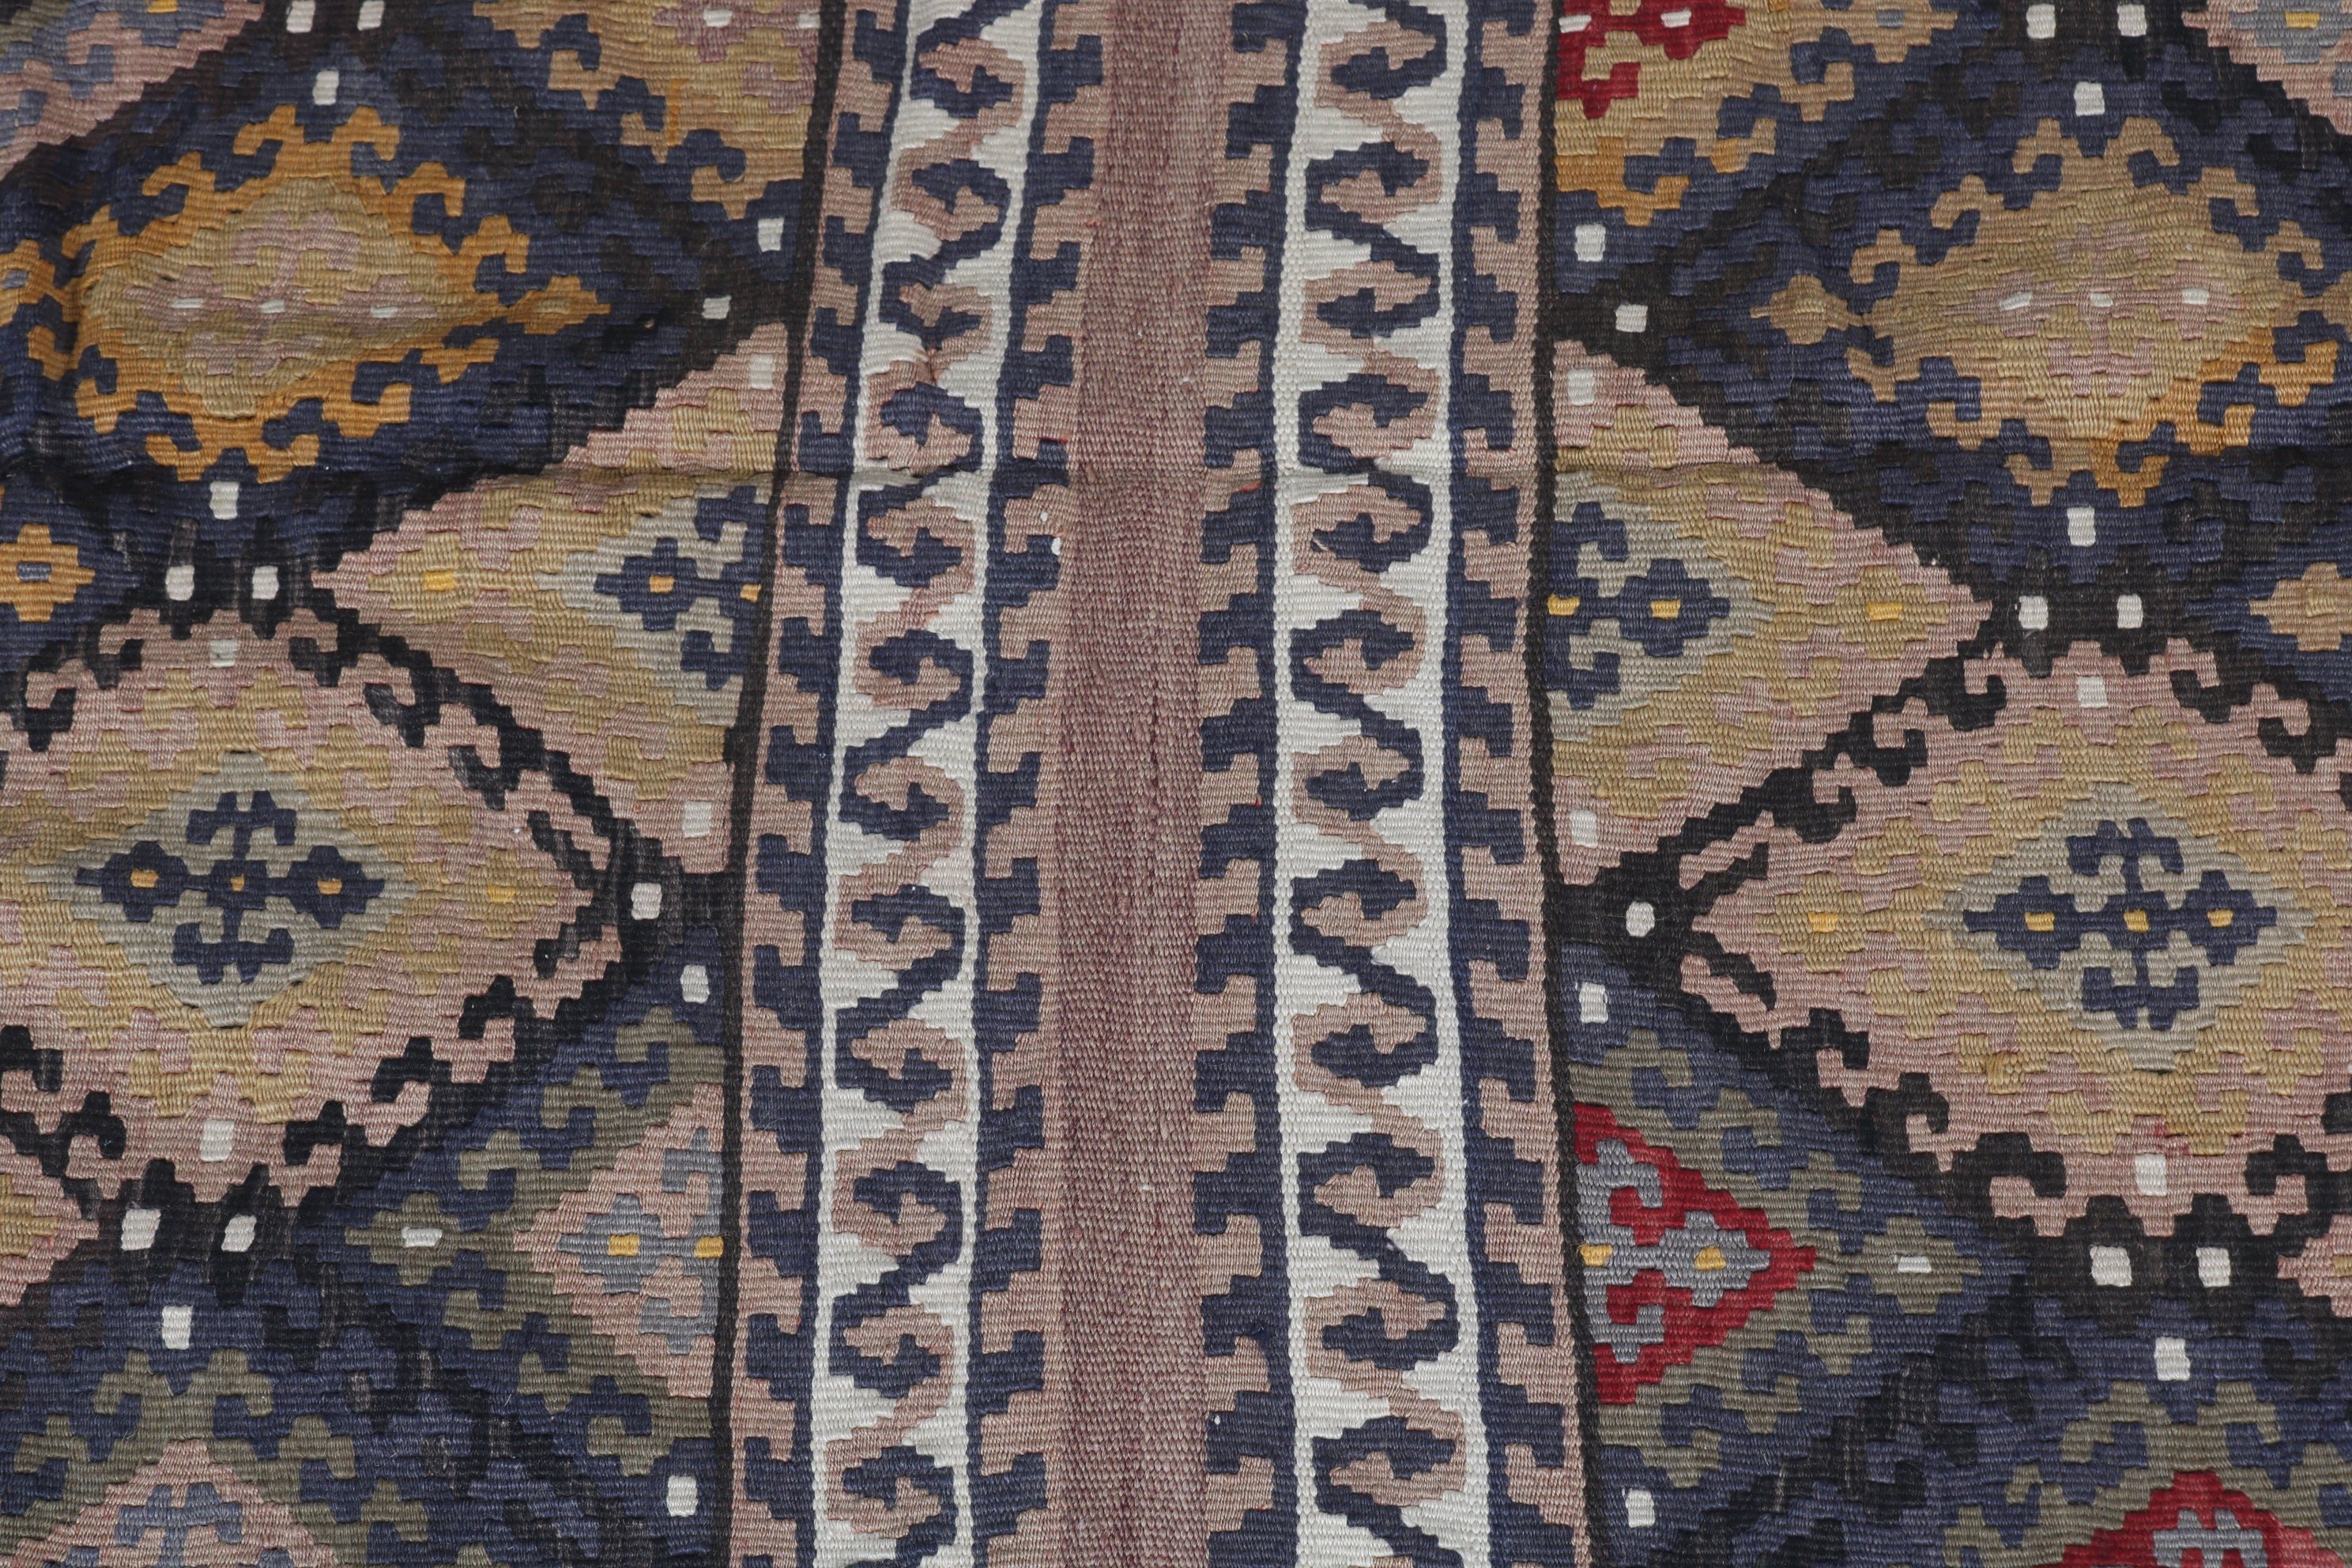 Vintage Rugs, Turkish Rug, Cool Rug, Tribal Rug, 3.3x5 ft Accent Rugs, Kilim, Entry Rug, Yellow Anatolian Rug, Oushak Rugs, Bedroom Rugs